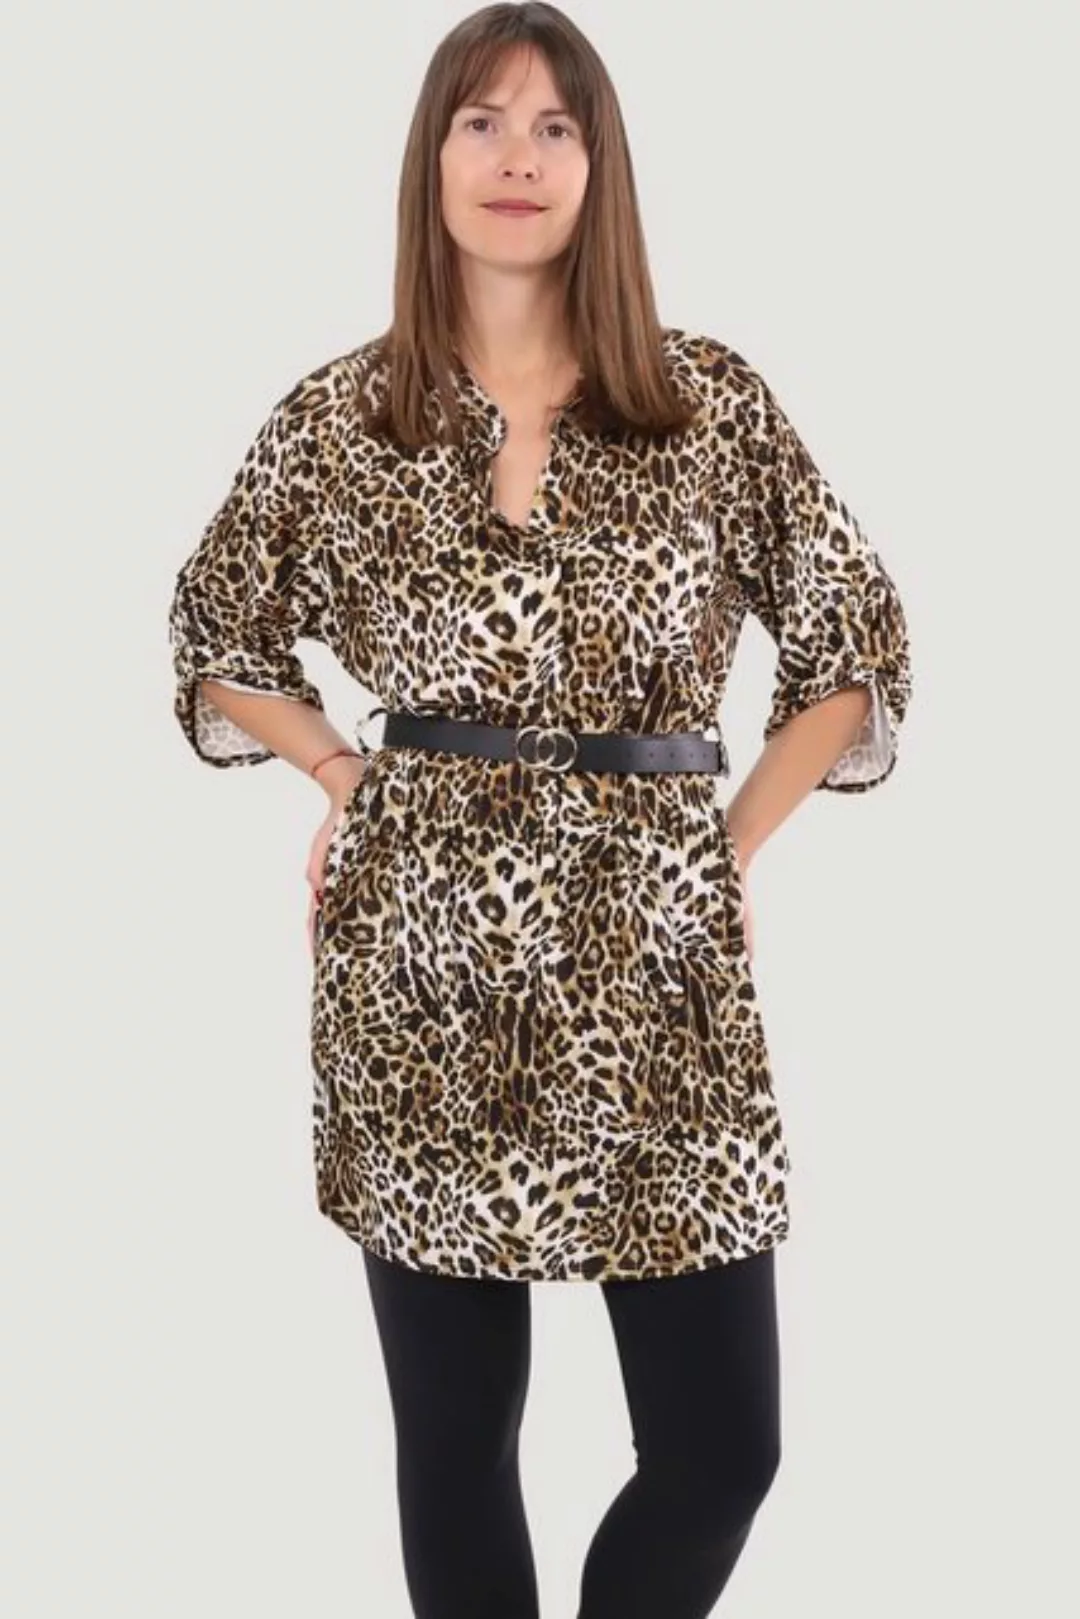 malito more than fashion Druckkleid 23203 Animalprint Kleid Tunika Bluse mi günstig online kaufen